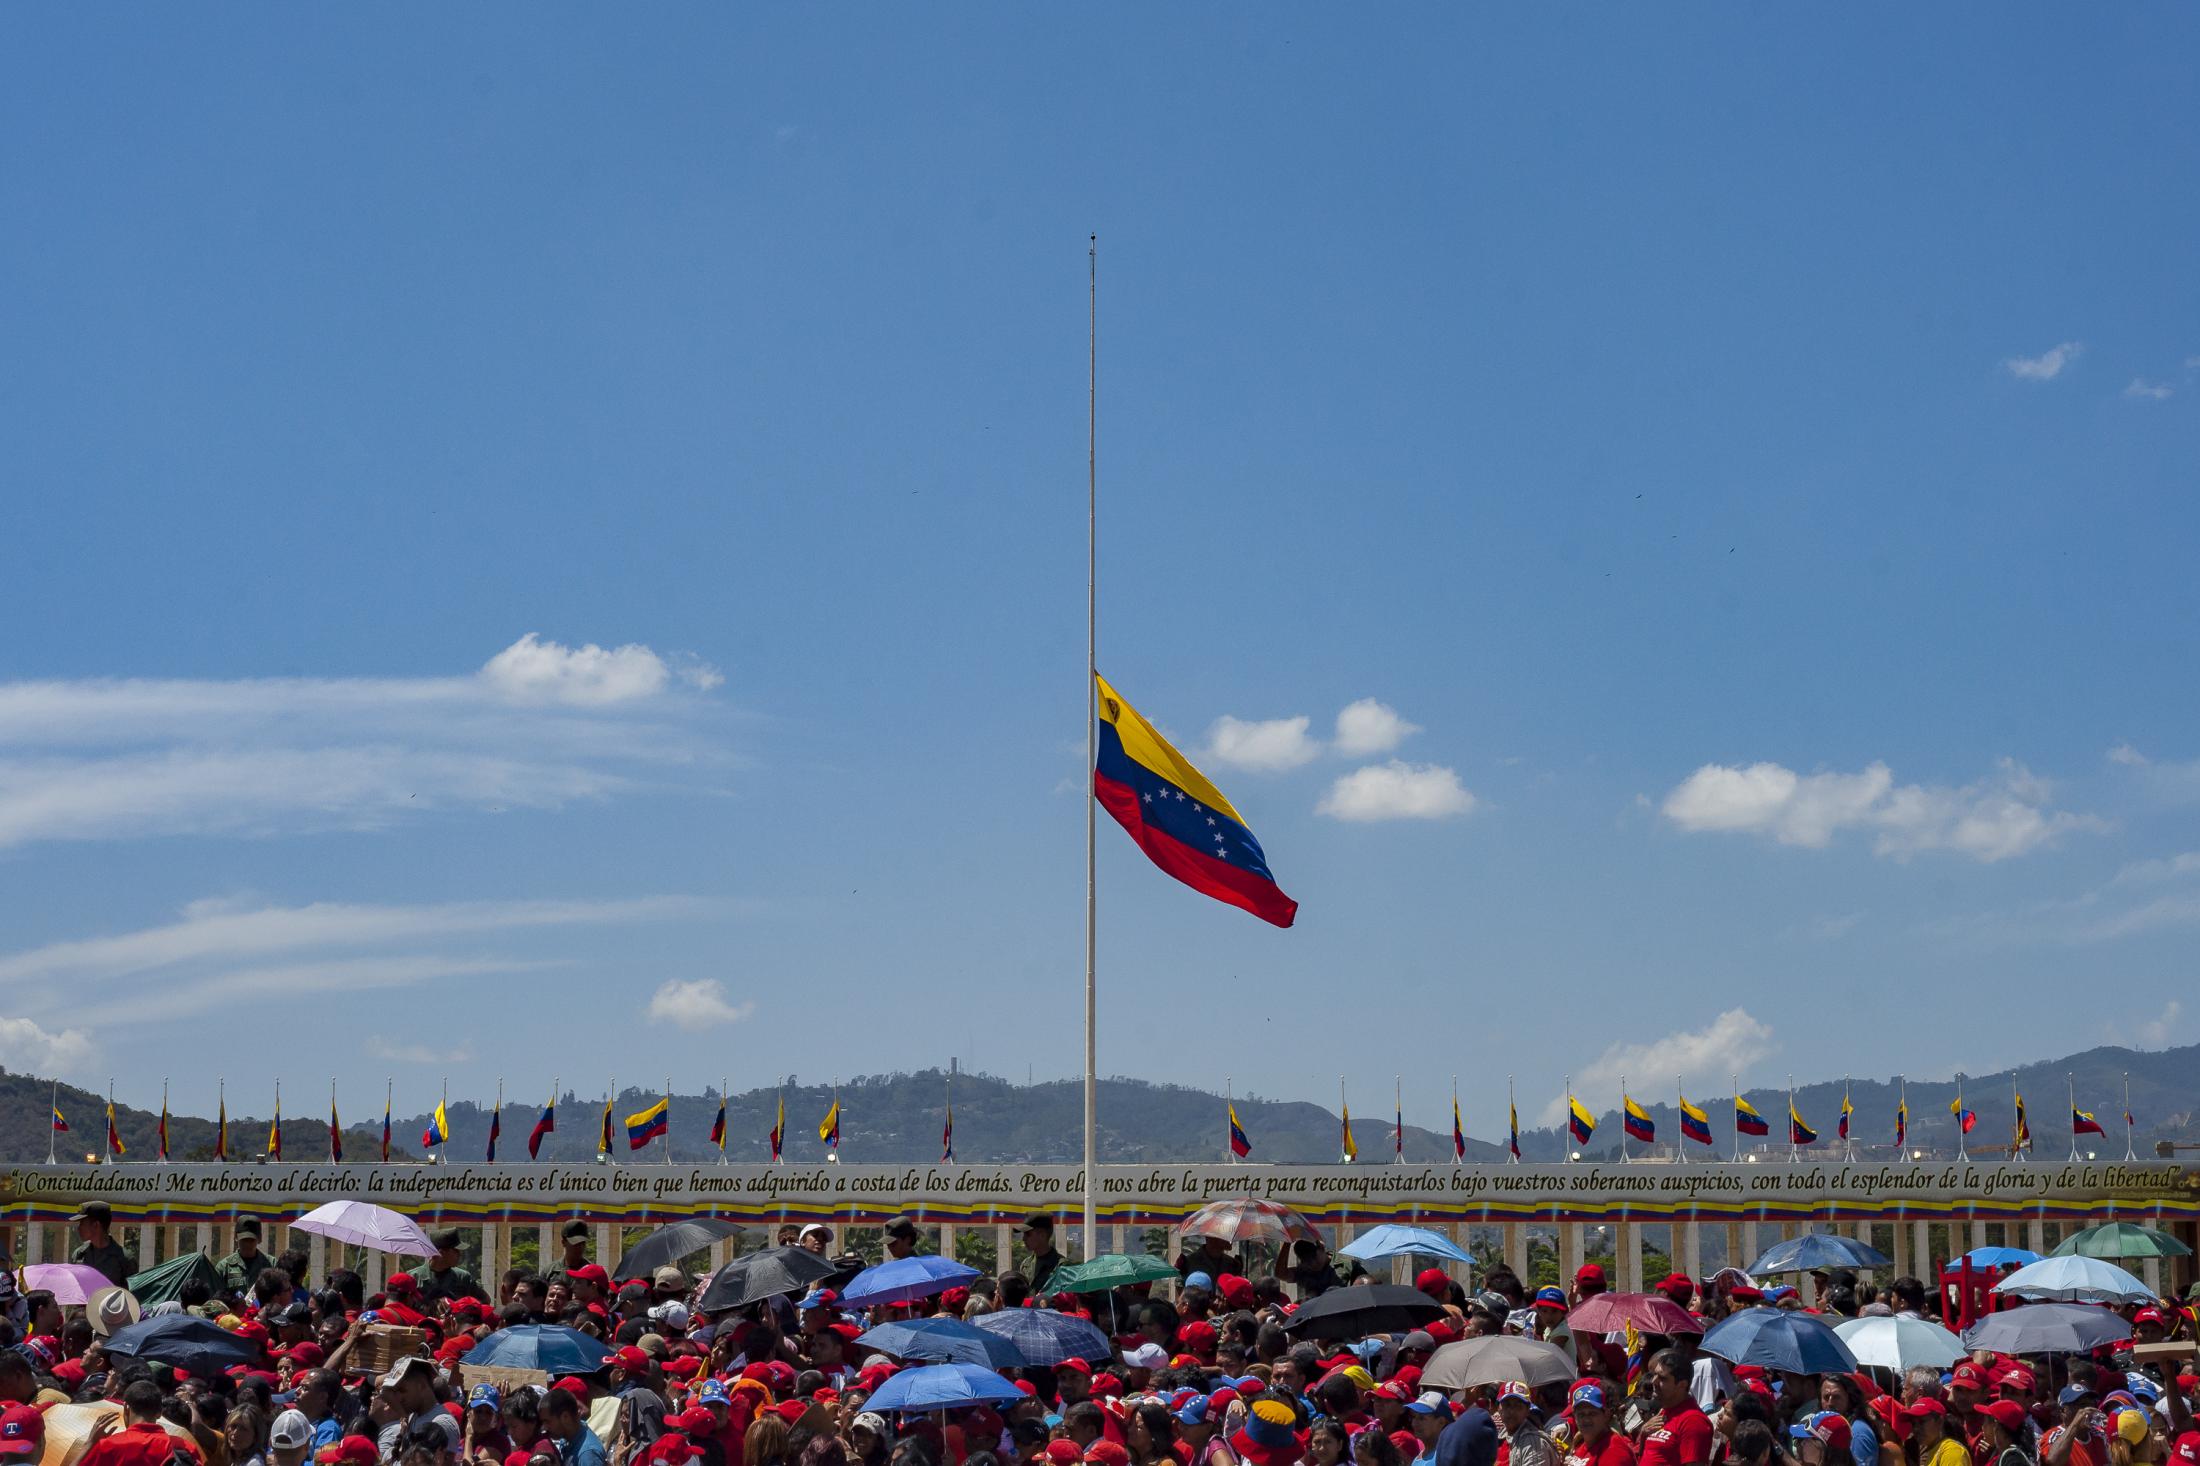 Chávez's death